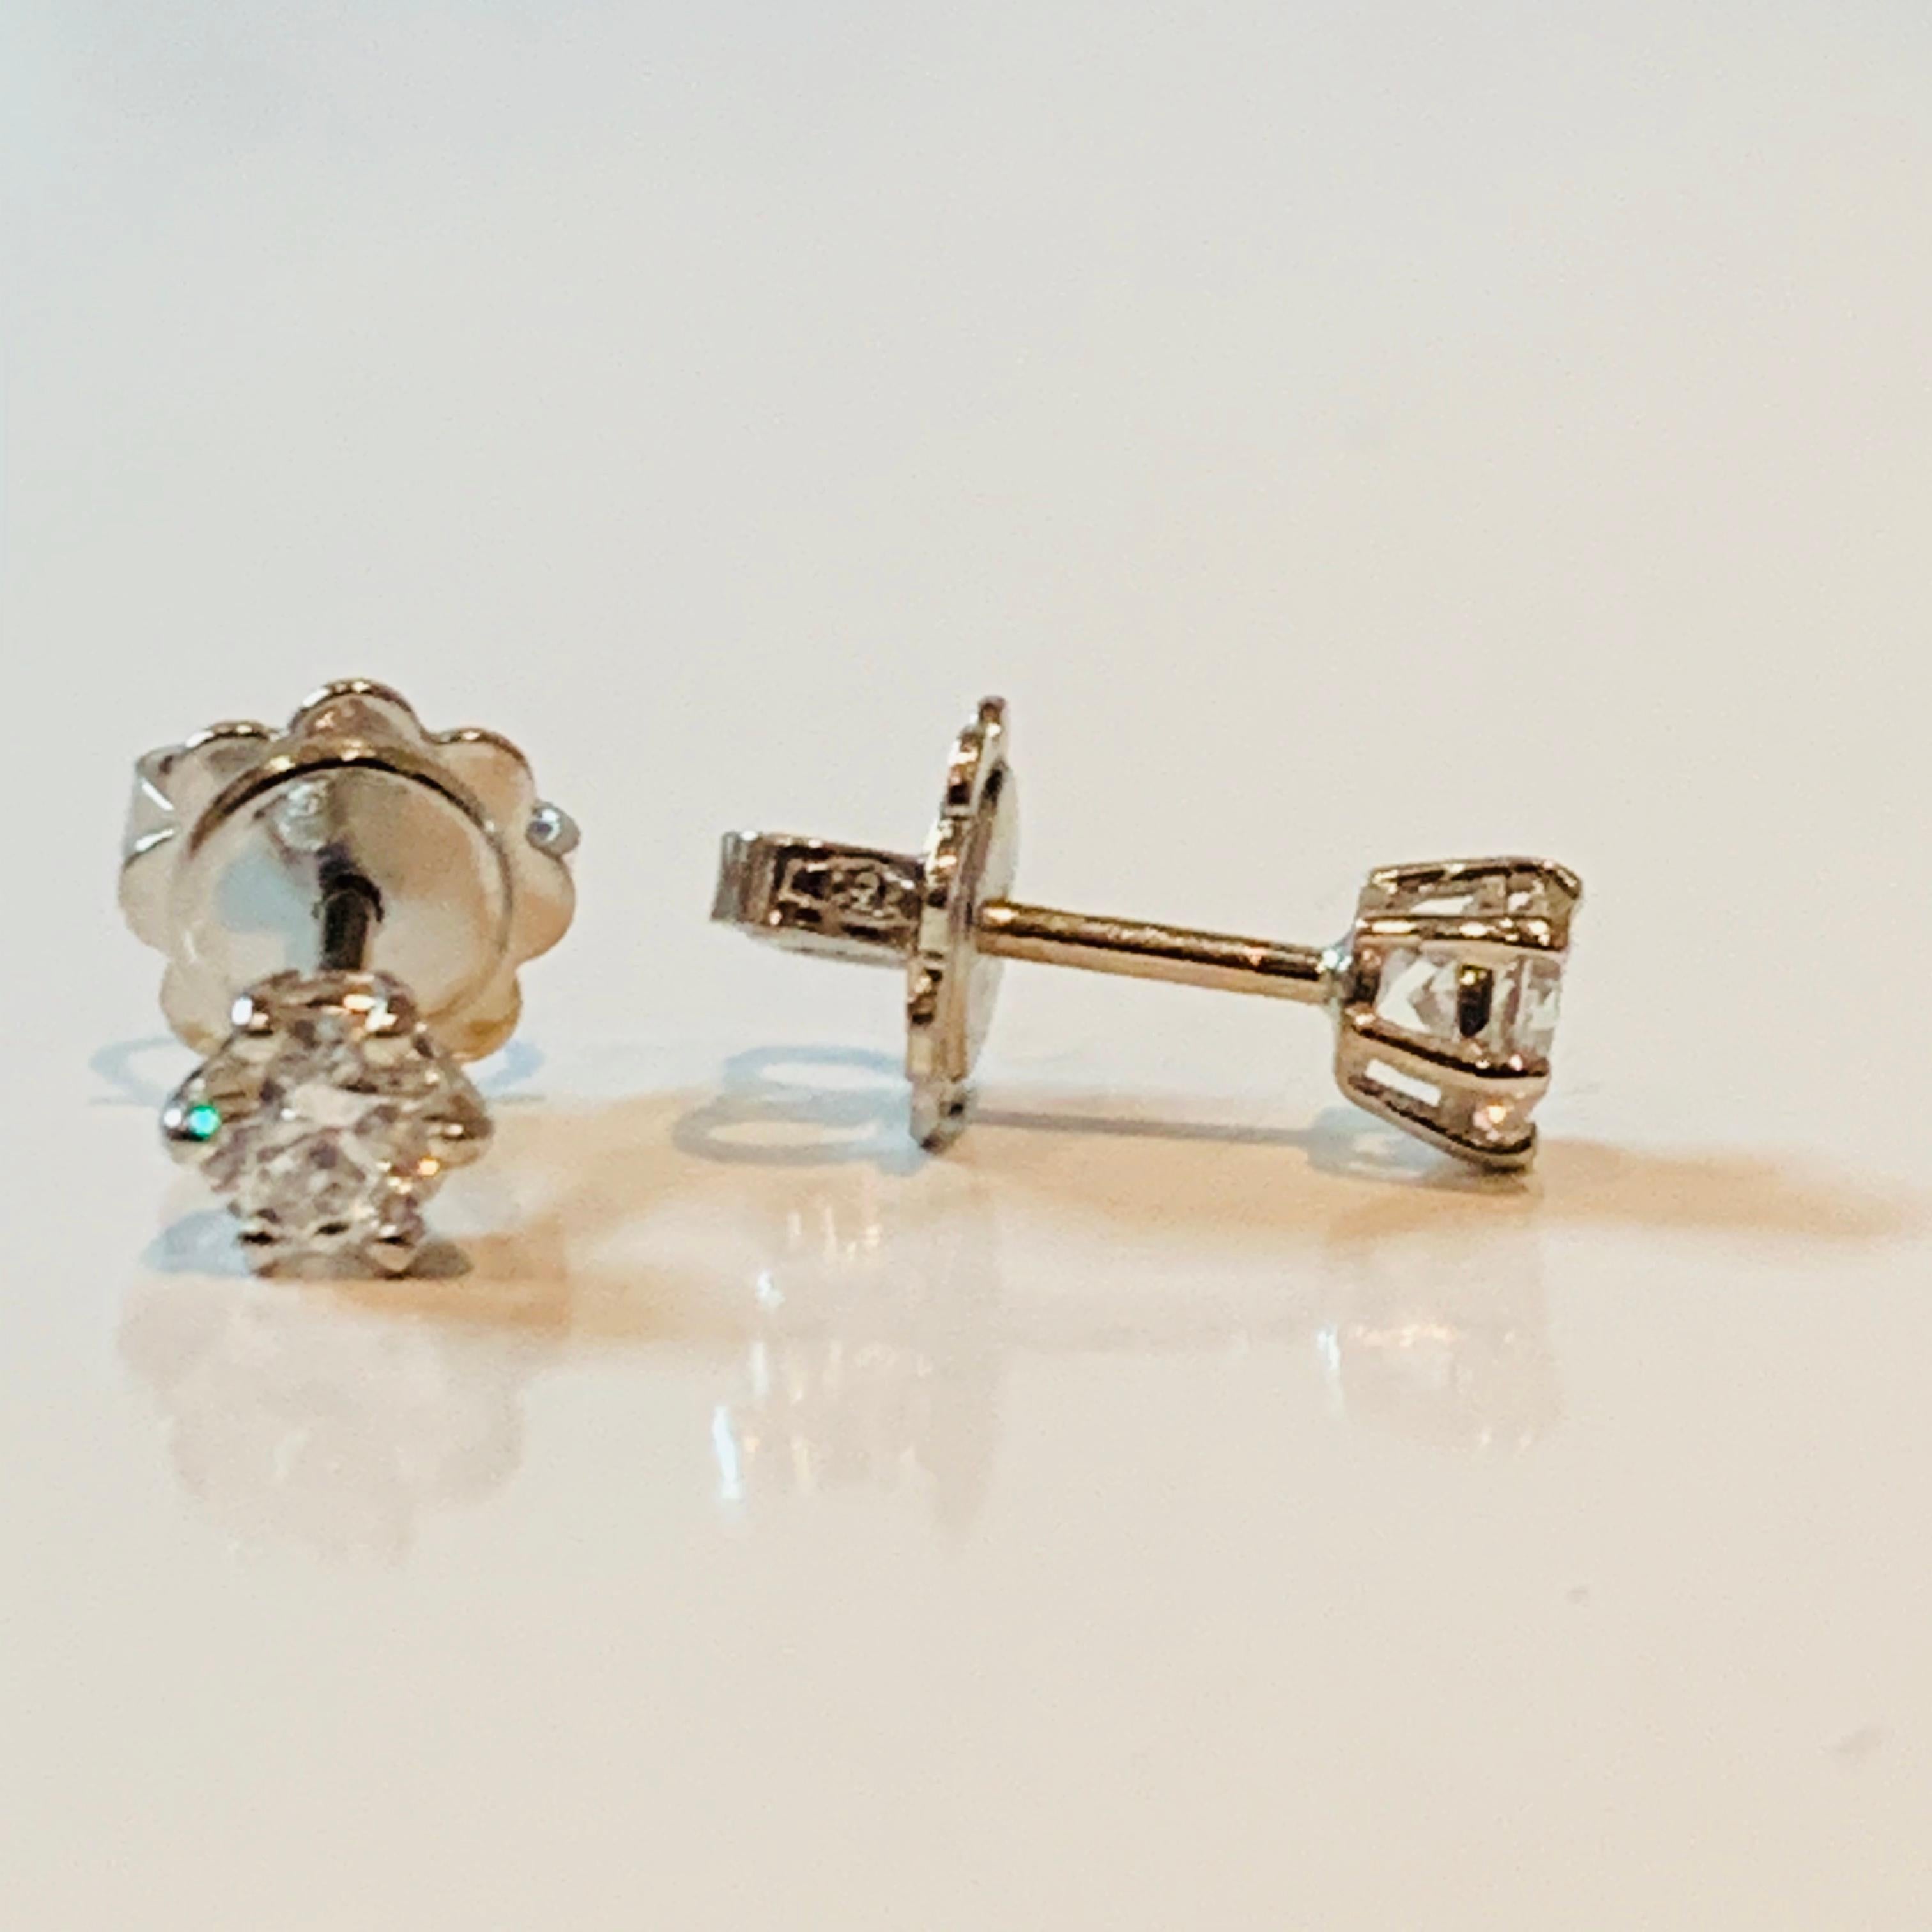 Round Cut HRD Certified 0.27 Carat Star Diamonds Set in 18Kt White Gold Stud Earrings